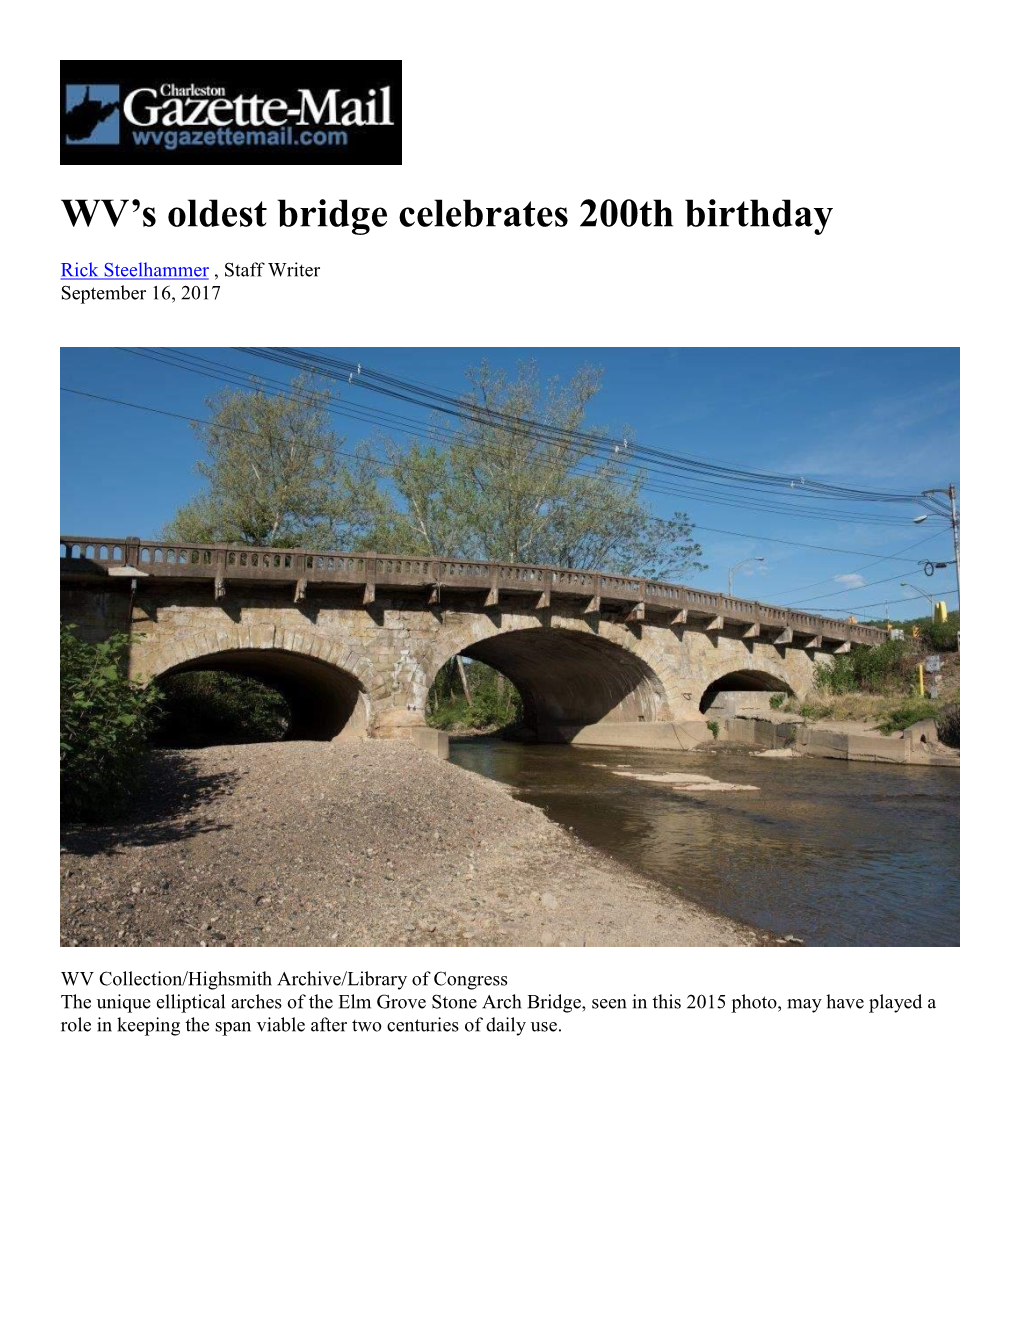 WV's Oldest Bridge Celebrates 200Th Birthday